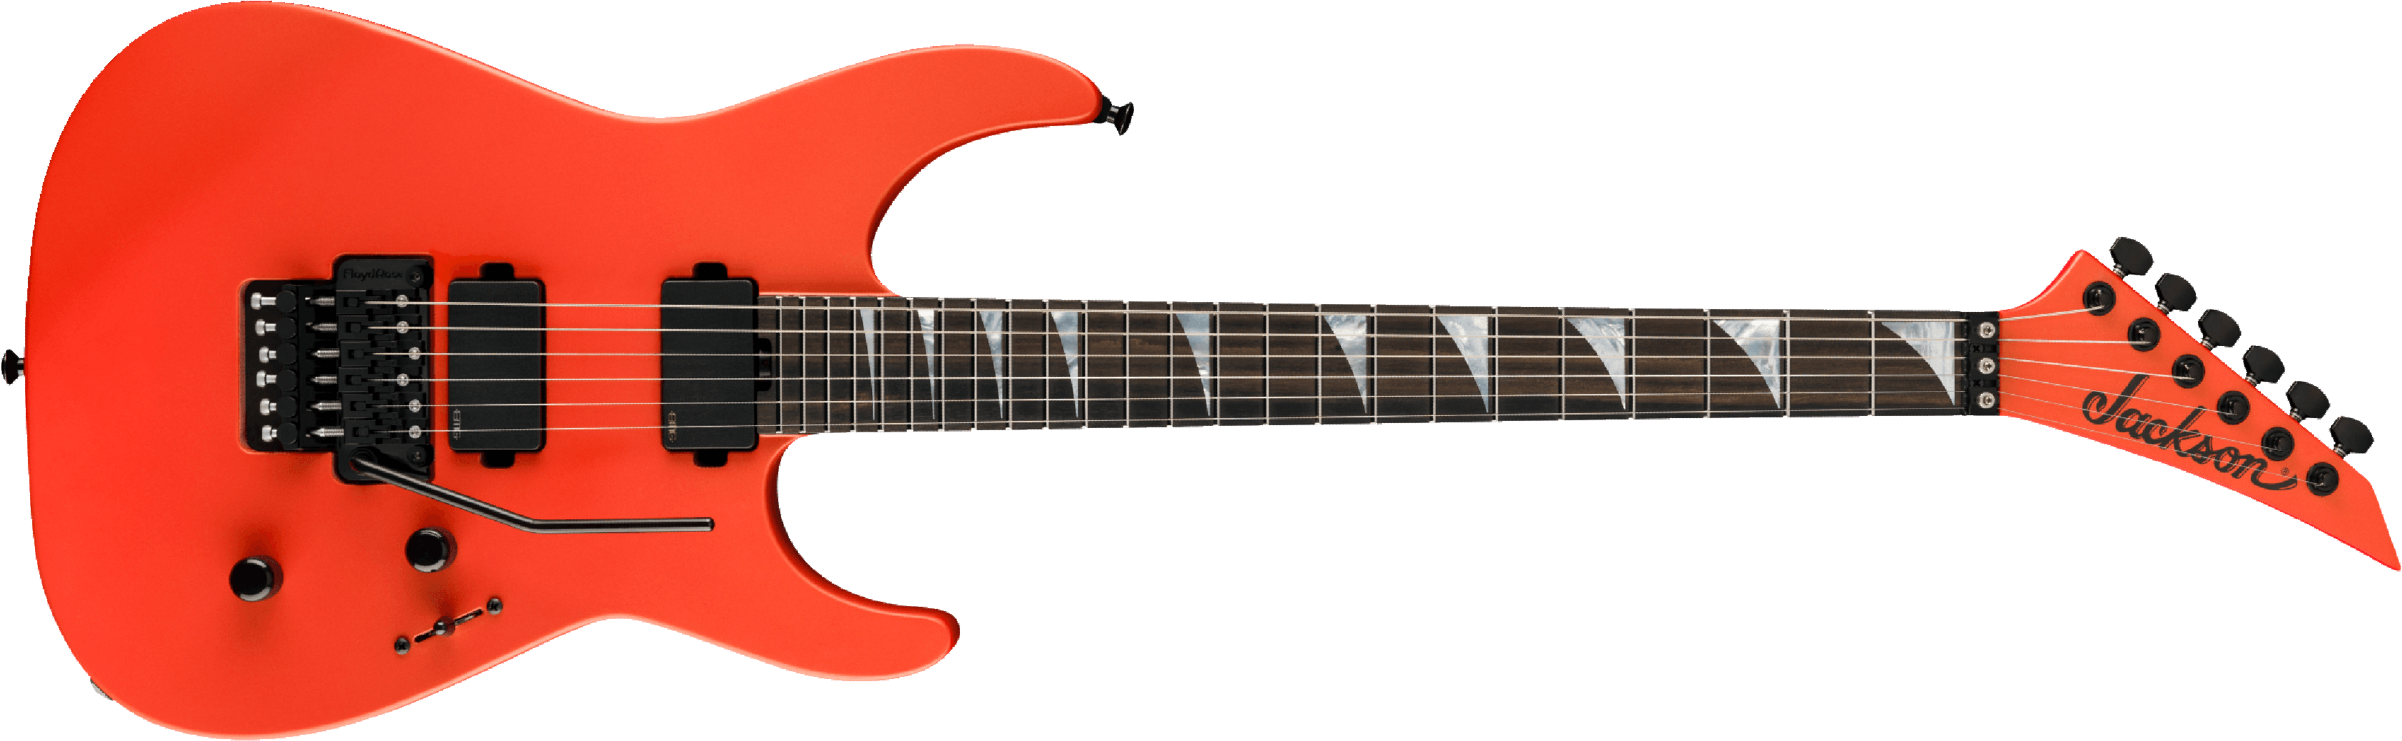 Jackson Sl2mg American Soloist Trem Hh Eb - Satin Lambo Orange - Guitarra electrica metalica - Main picture